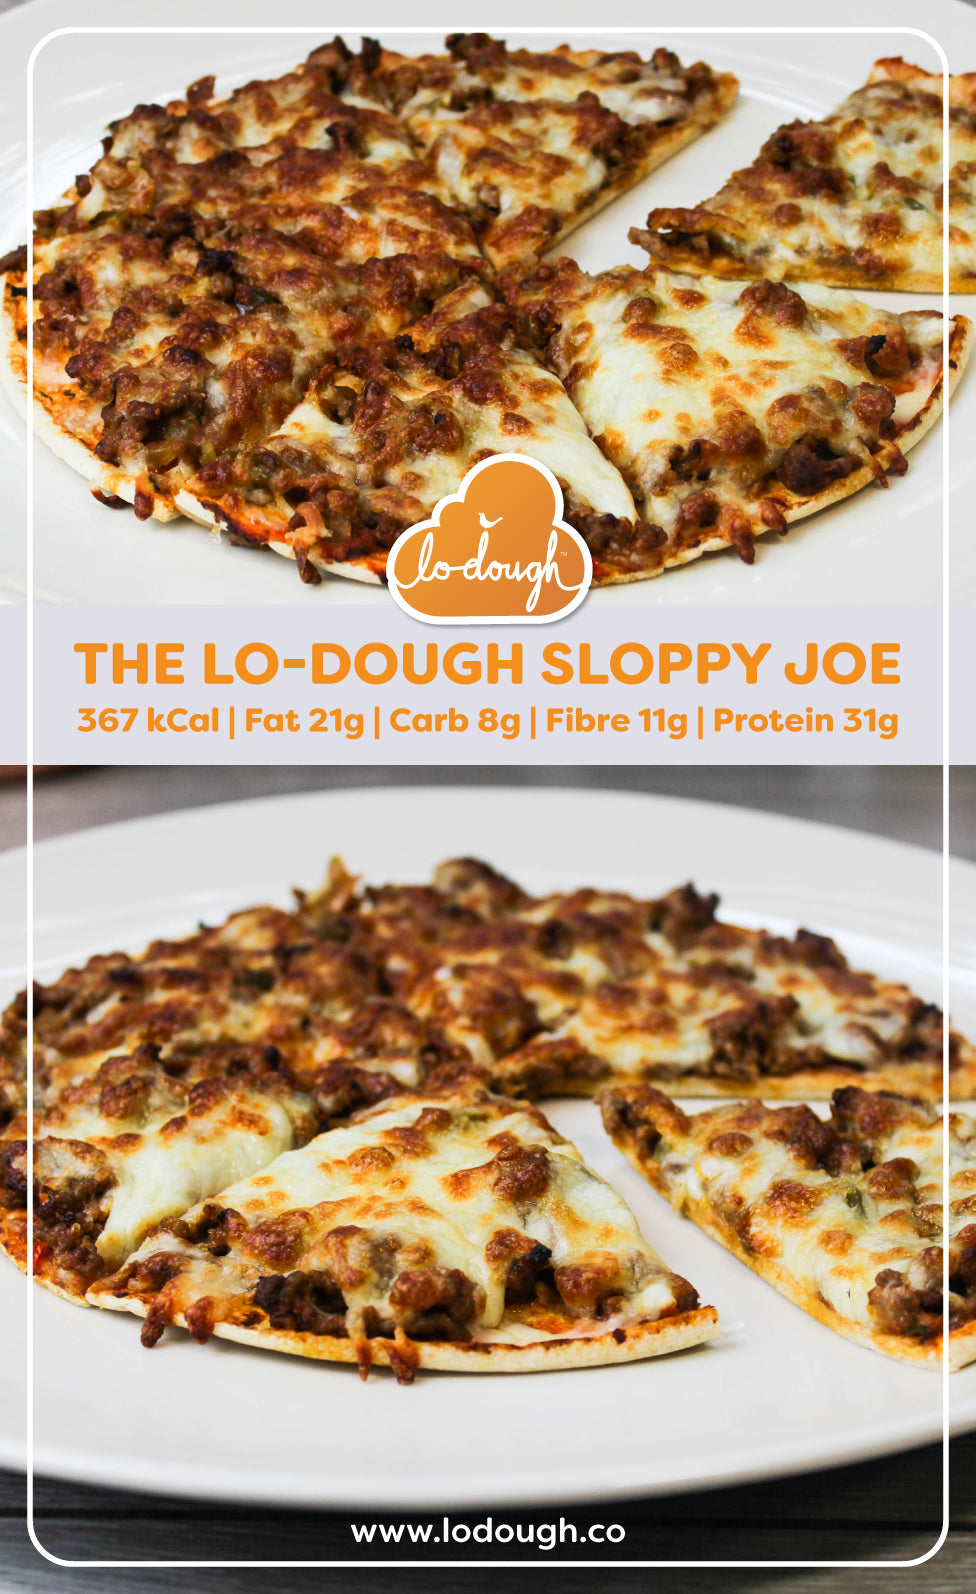 The Lo-Dough Sloppy Joe